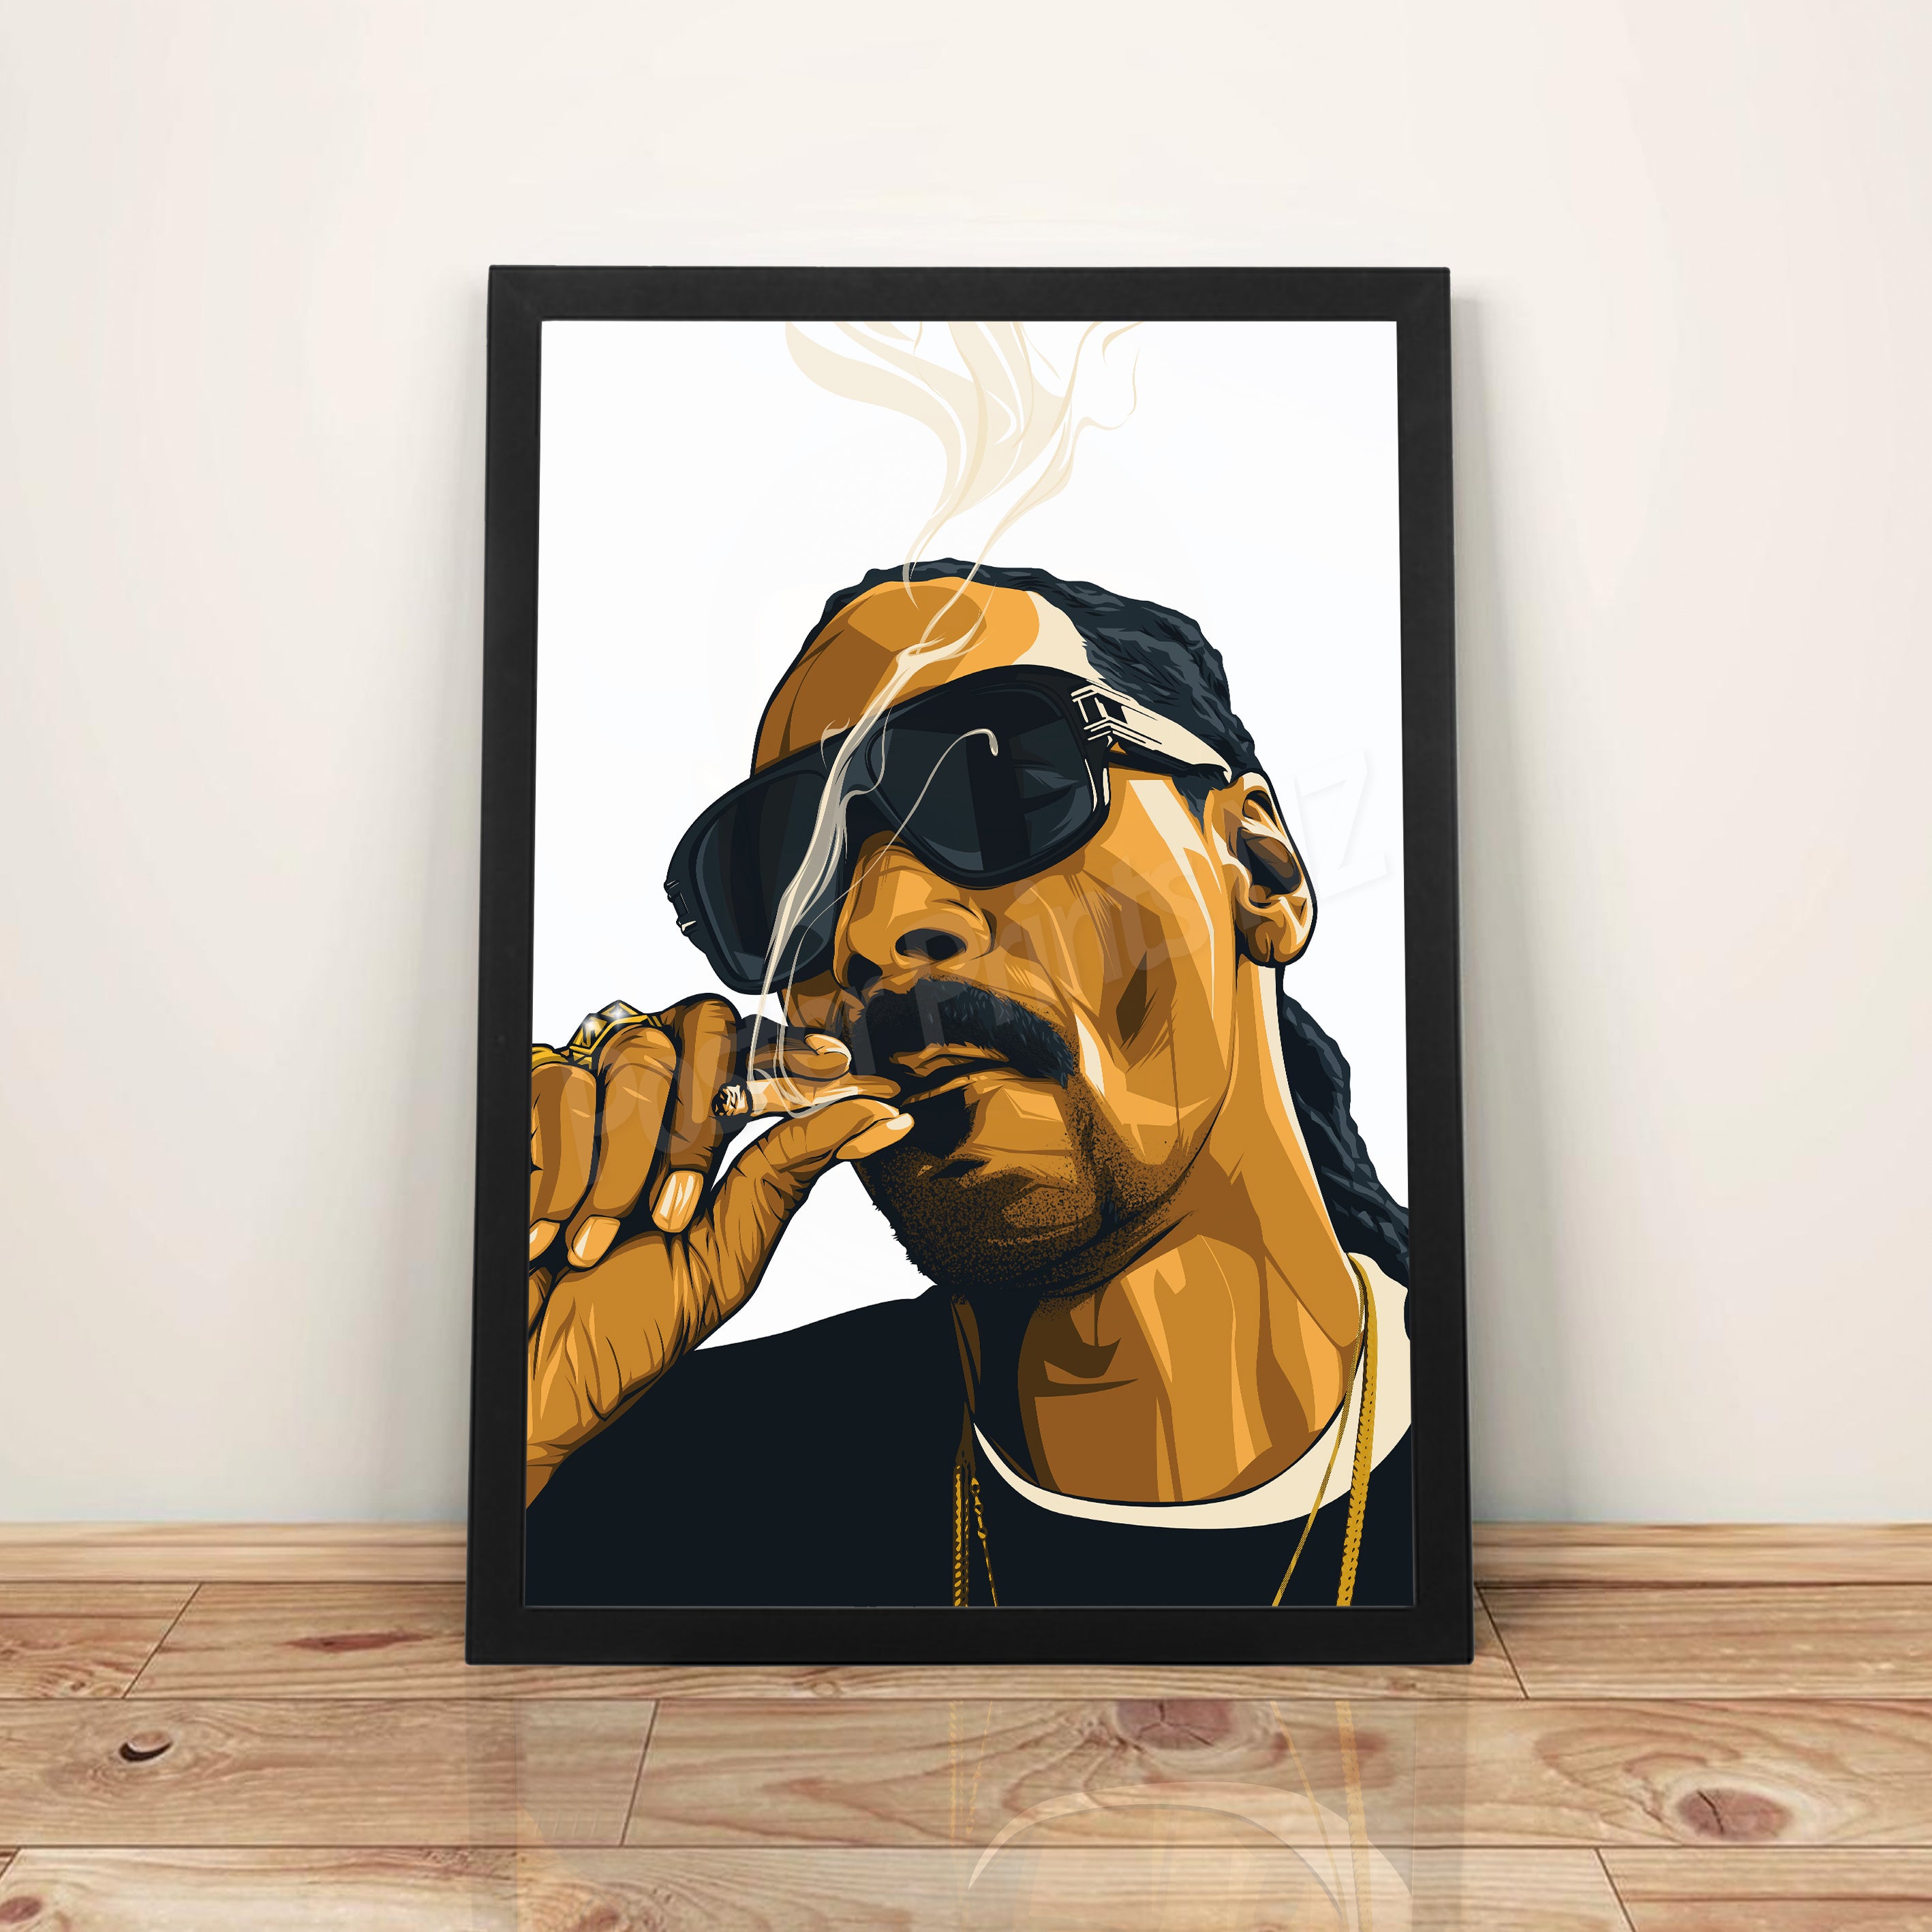 Snoop Dogg - A3 Framed Art Poster